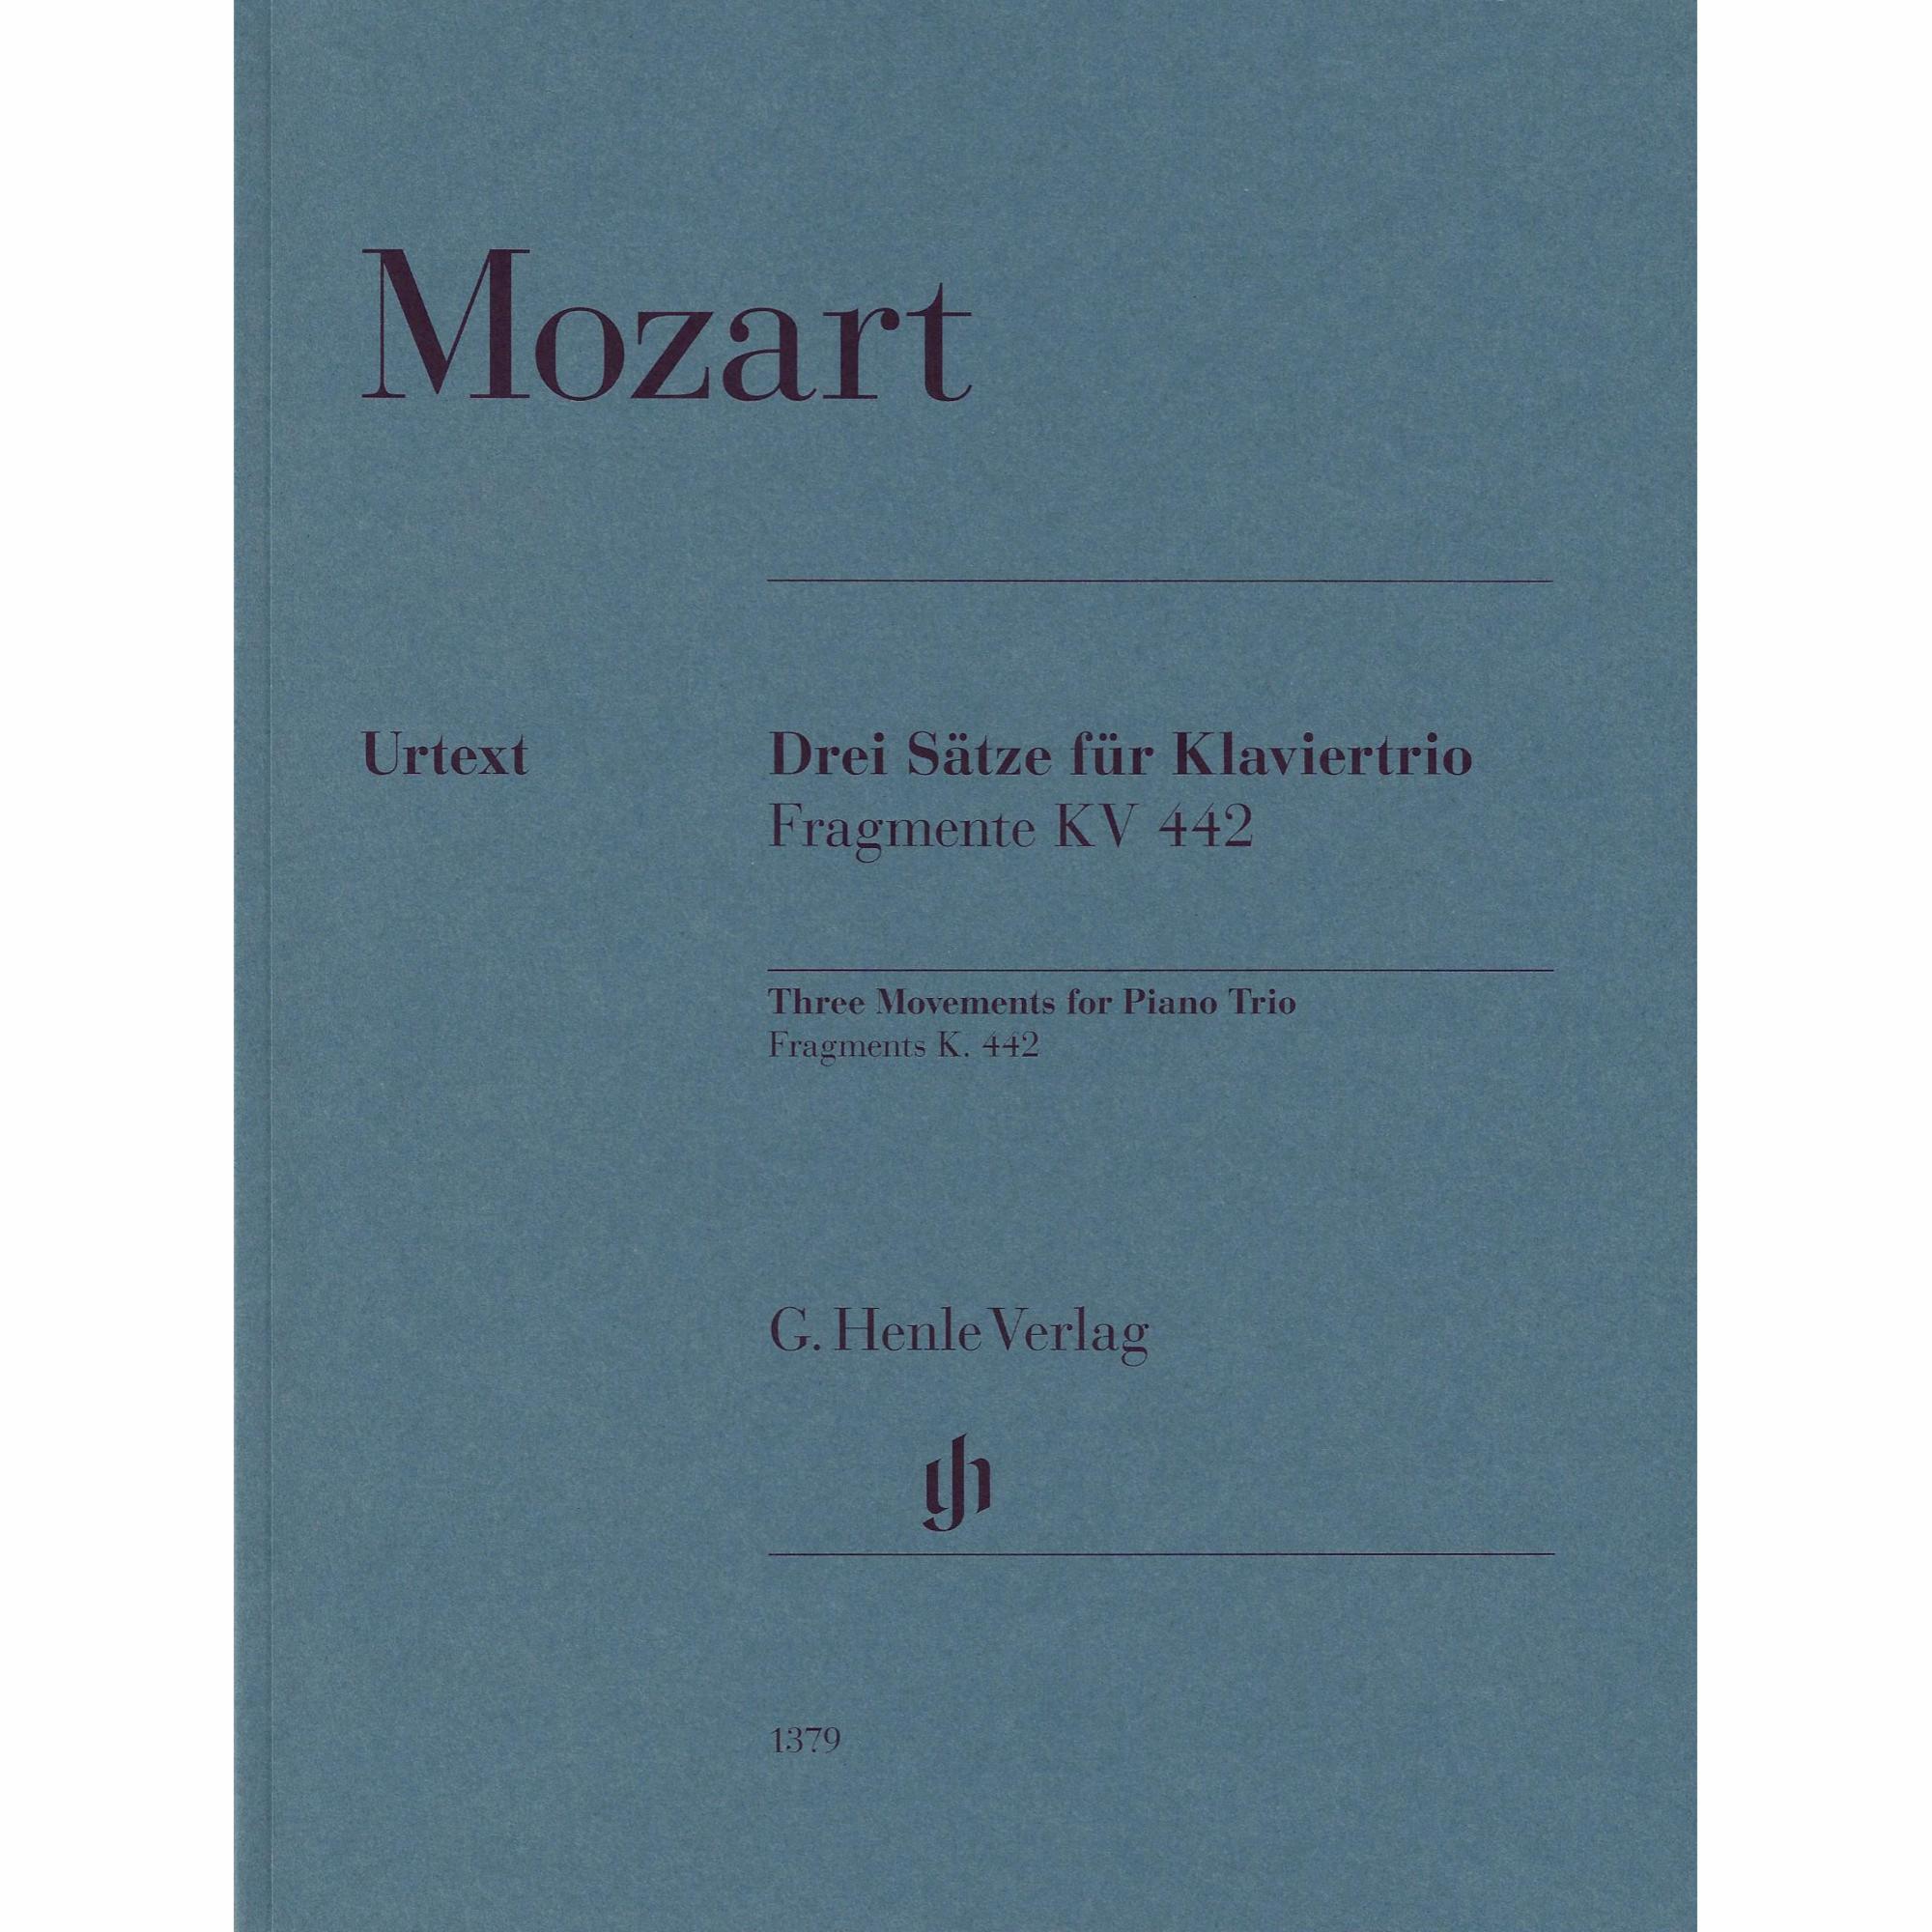 Mozart -- Three Movements for Piano Trio, Fragments K. 442